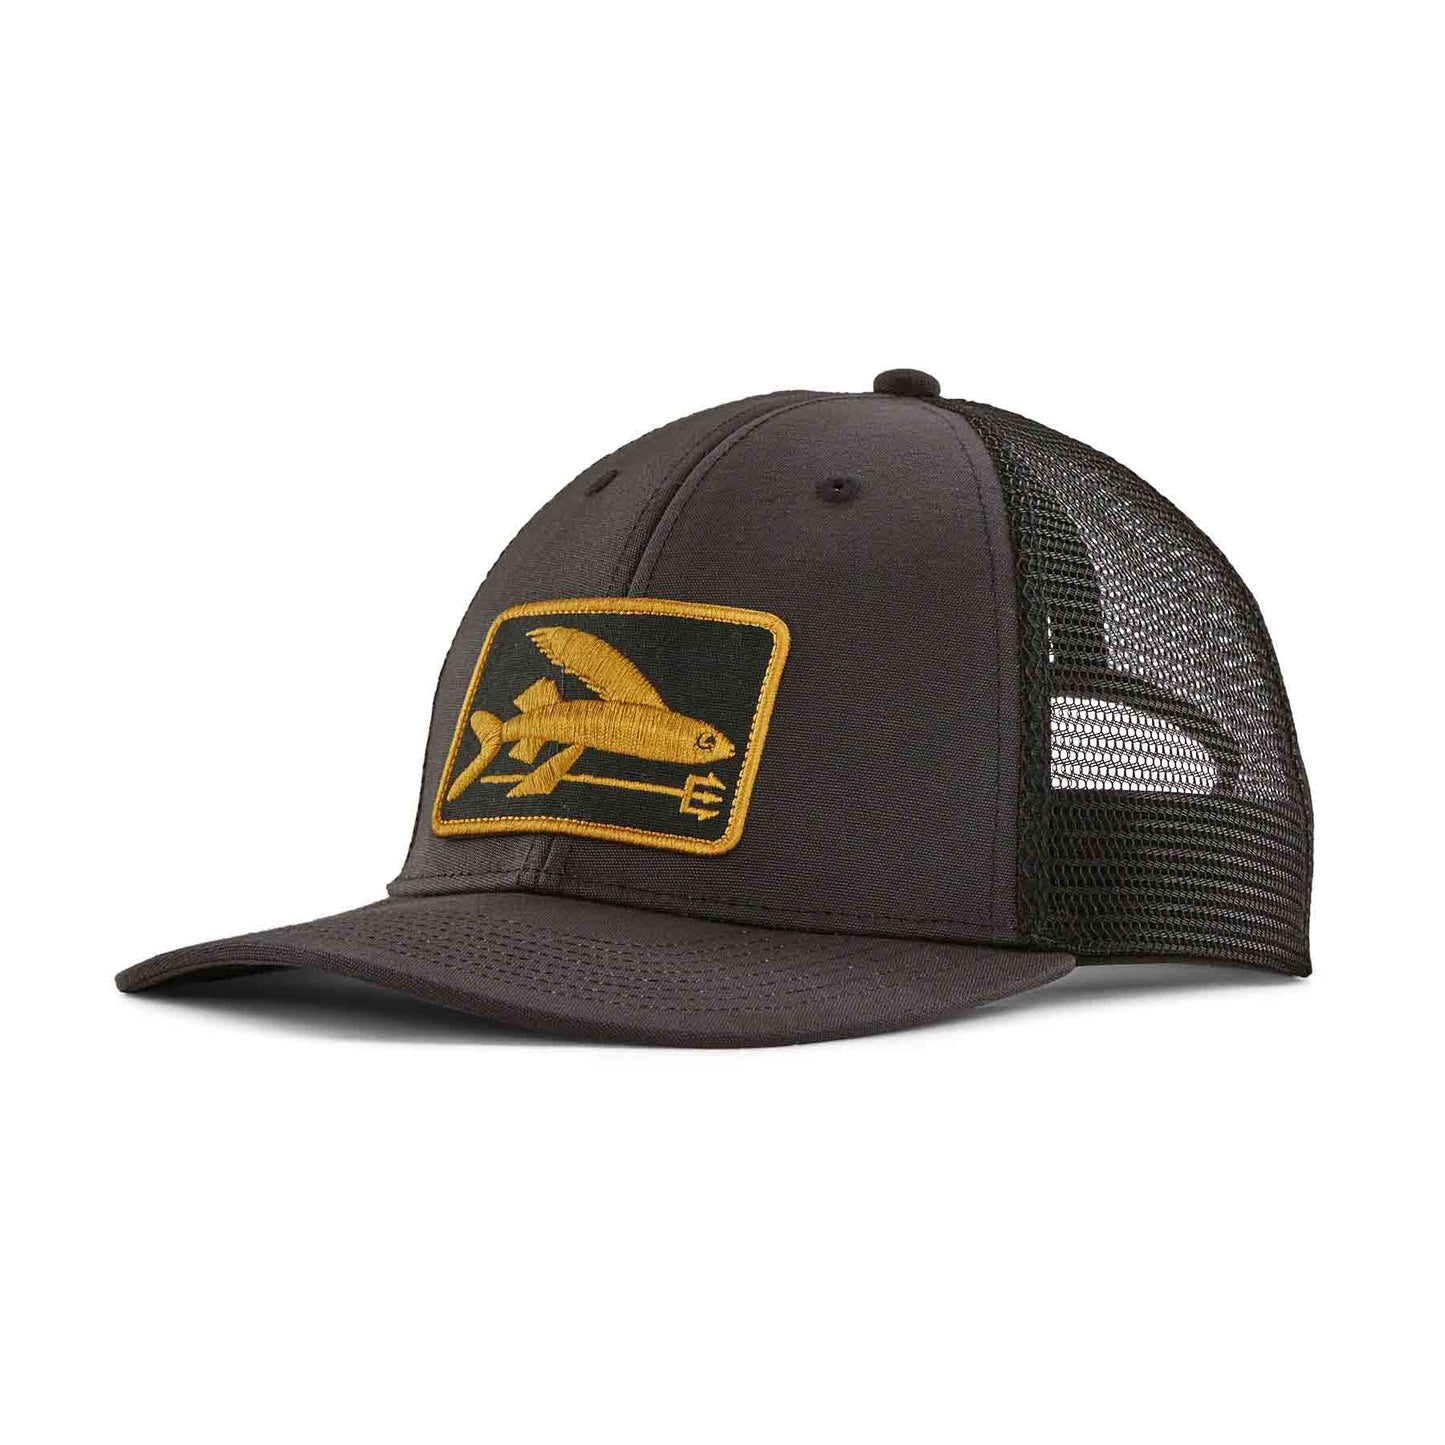 Patagonia®Flying Fish LoPro Trucker Hat